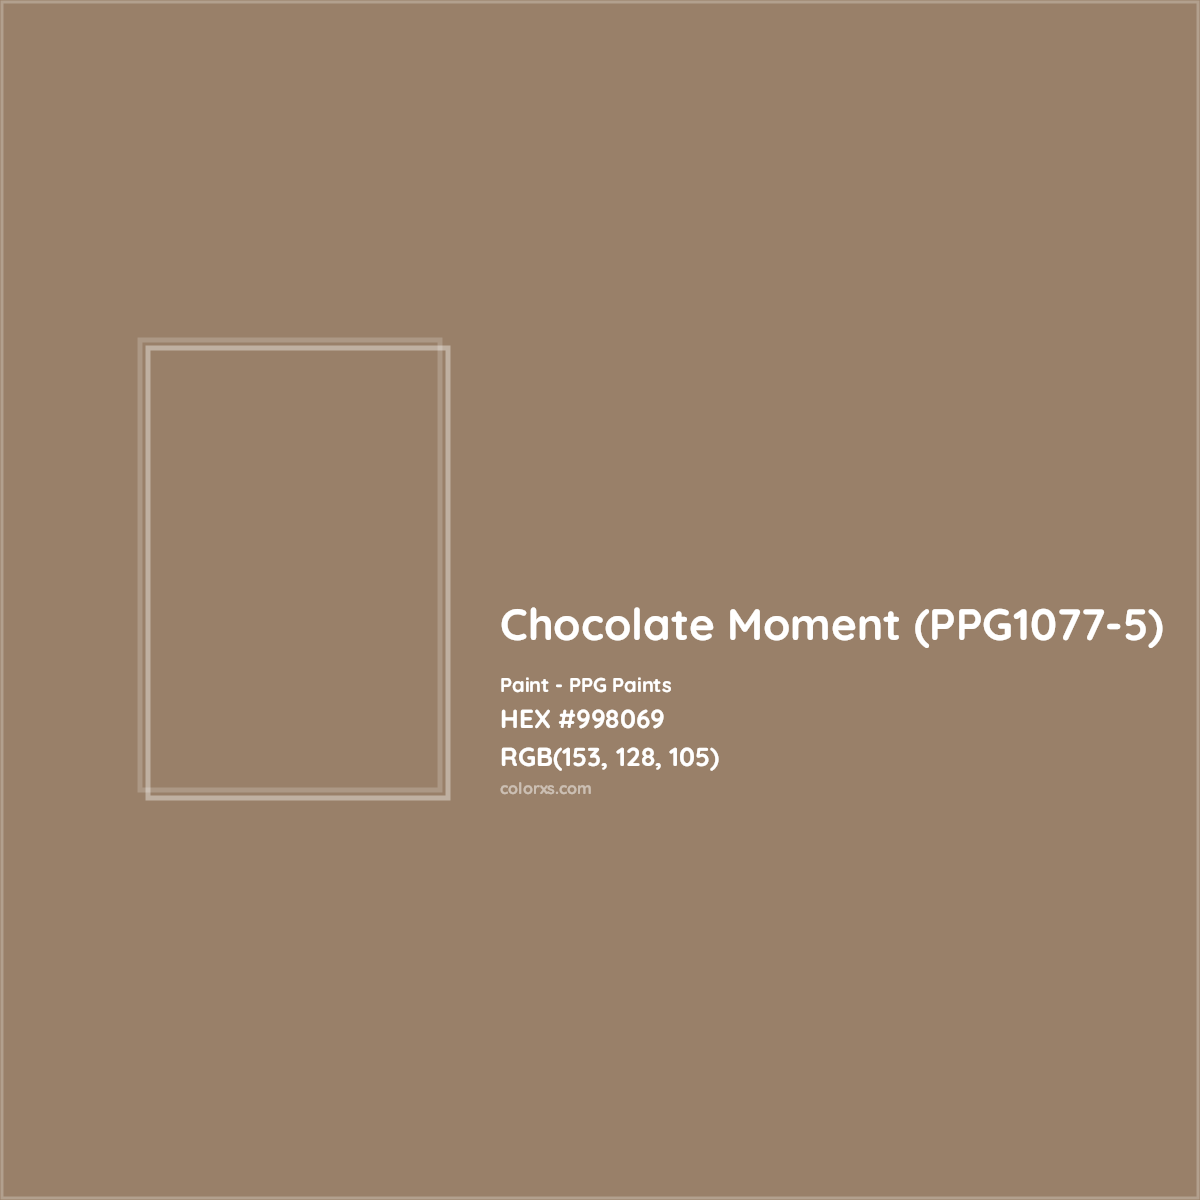 HEX #998069 Chocolate Moment (PPG1077-5) Paint PPG Paints - Color Code